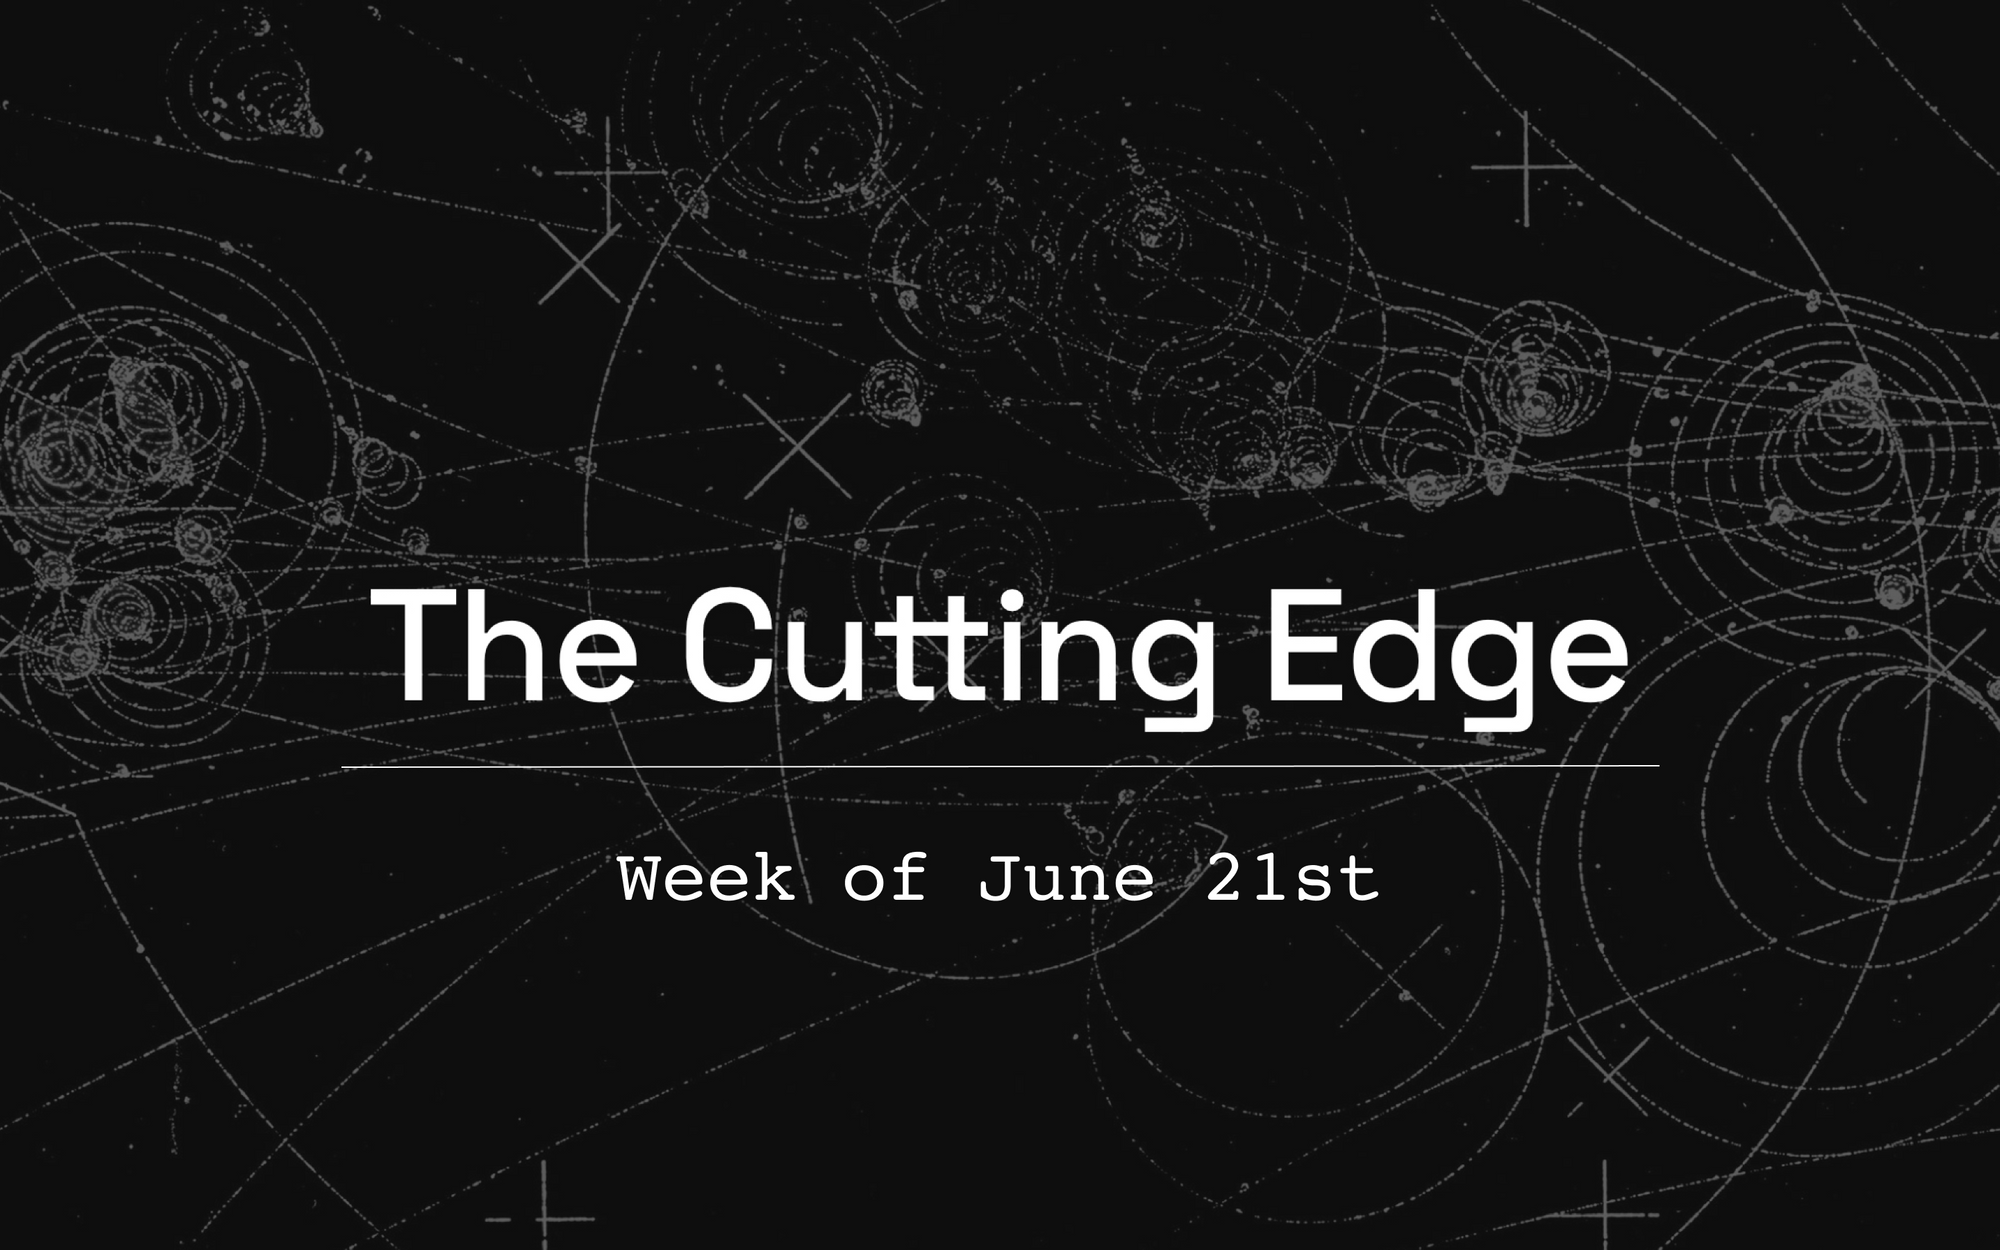 The Cutting Edge: Week of June 21st